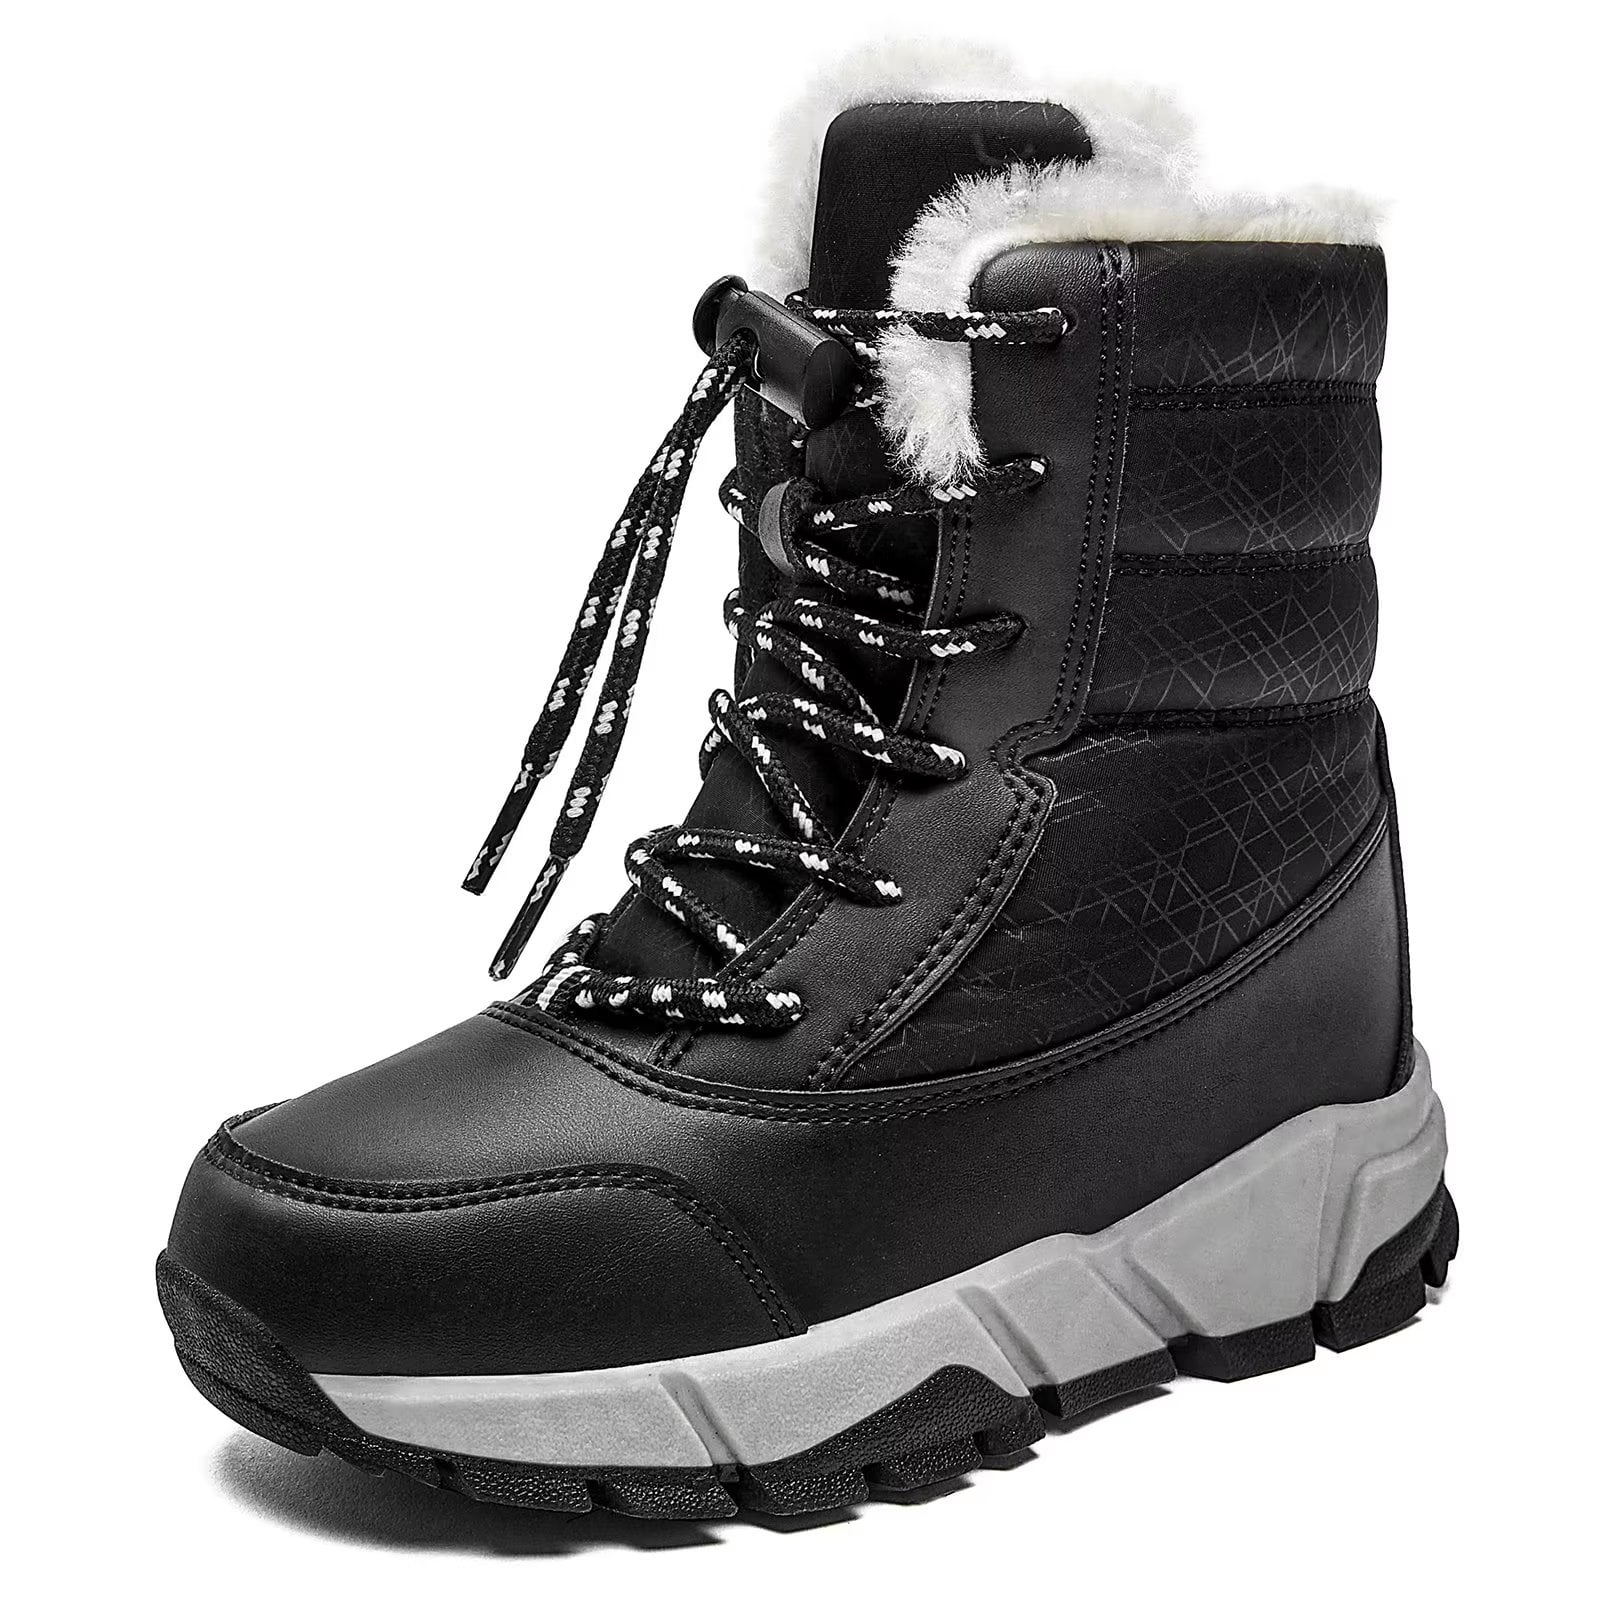 Snow Boots for Kids Girls Boys Outdoor Winter Waterproof Lightweight High Booties Shoes 